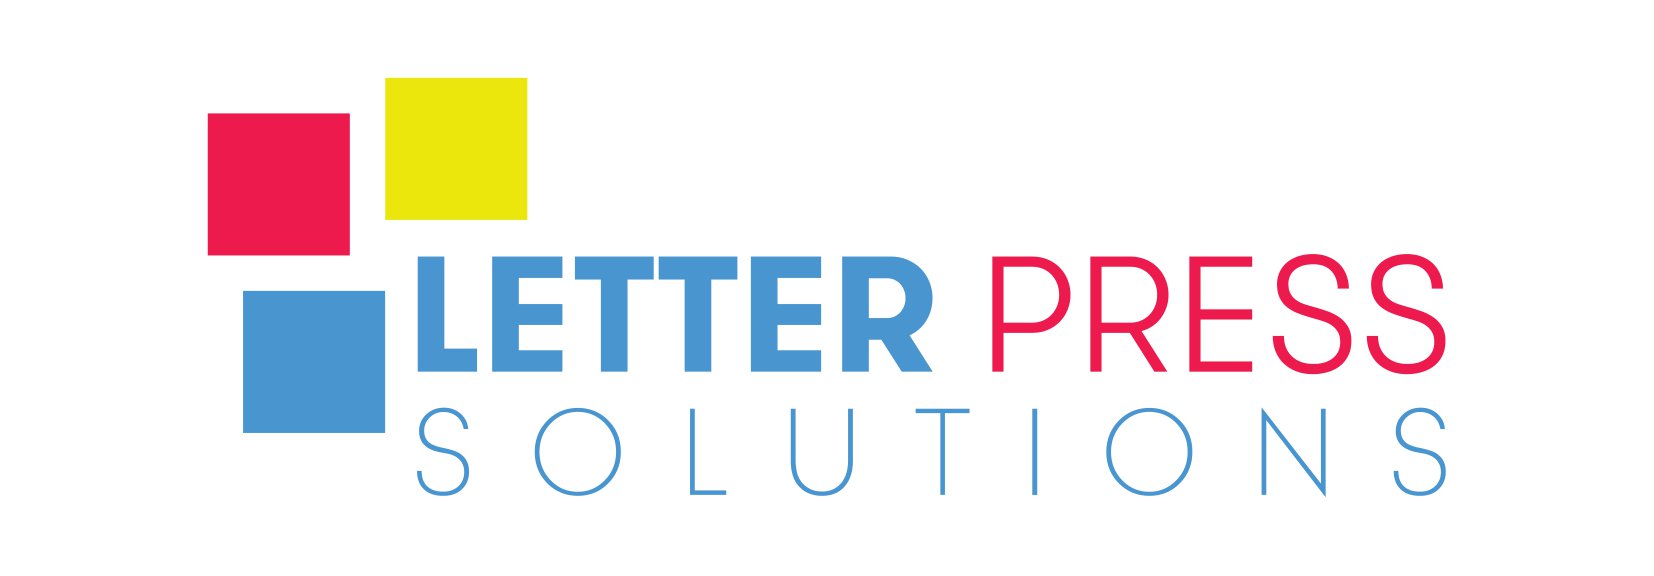 Letterpress Solutions